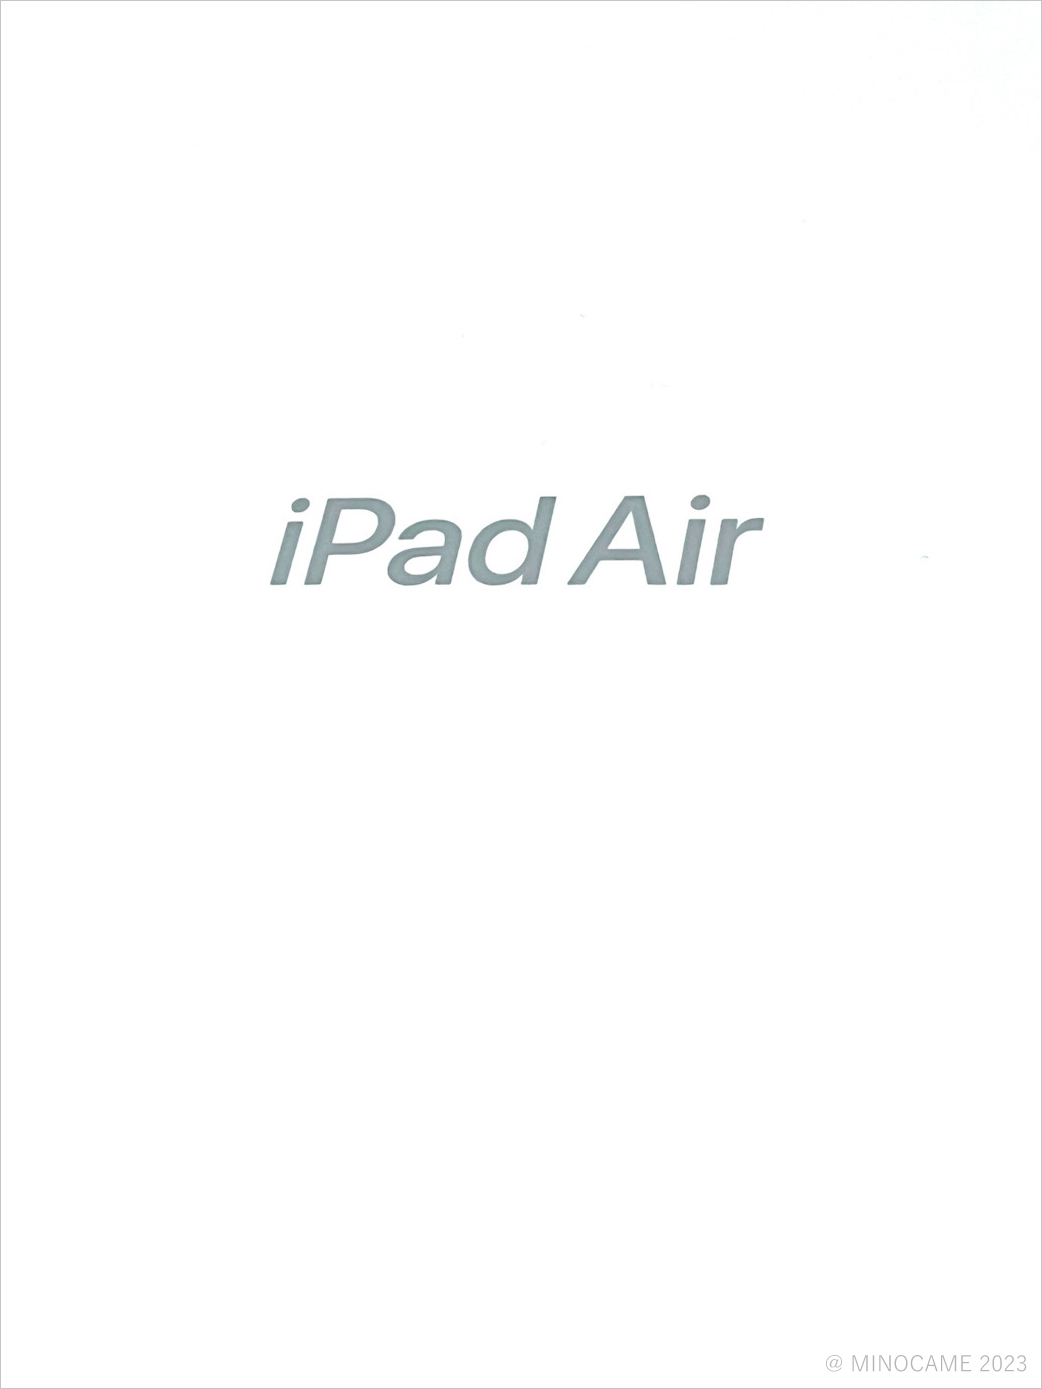 iPad Air Logo large